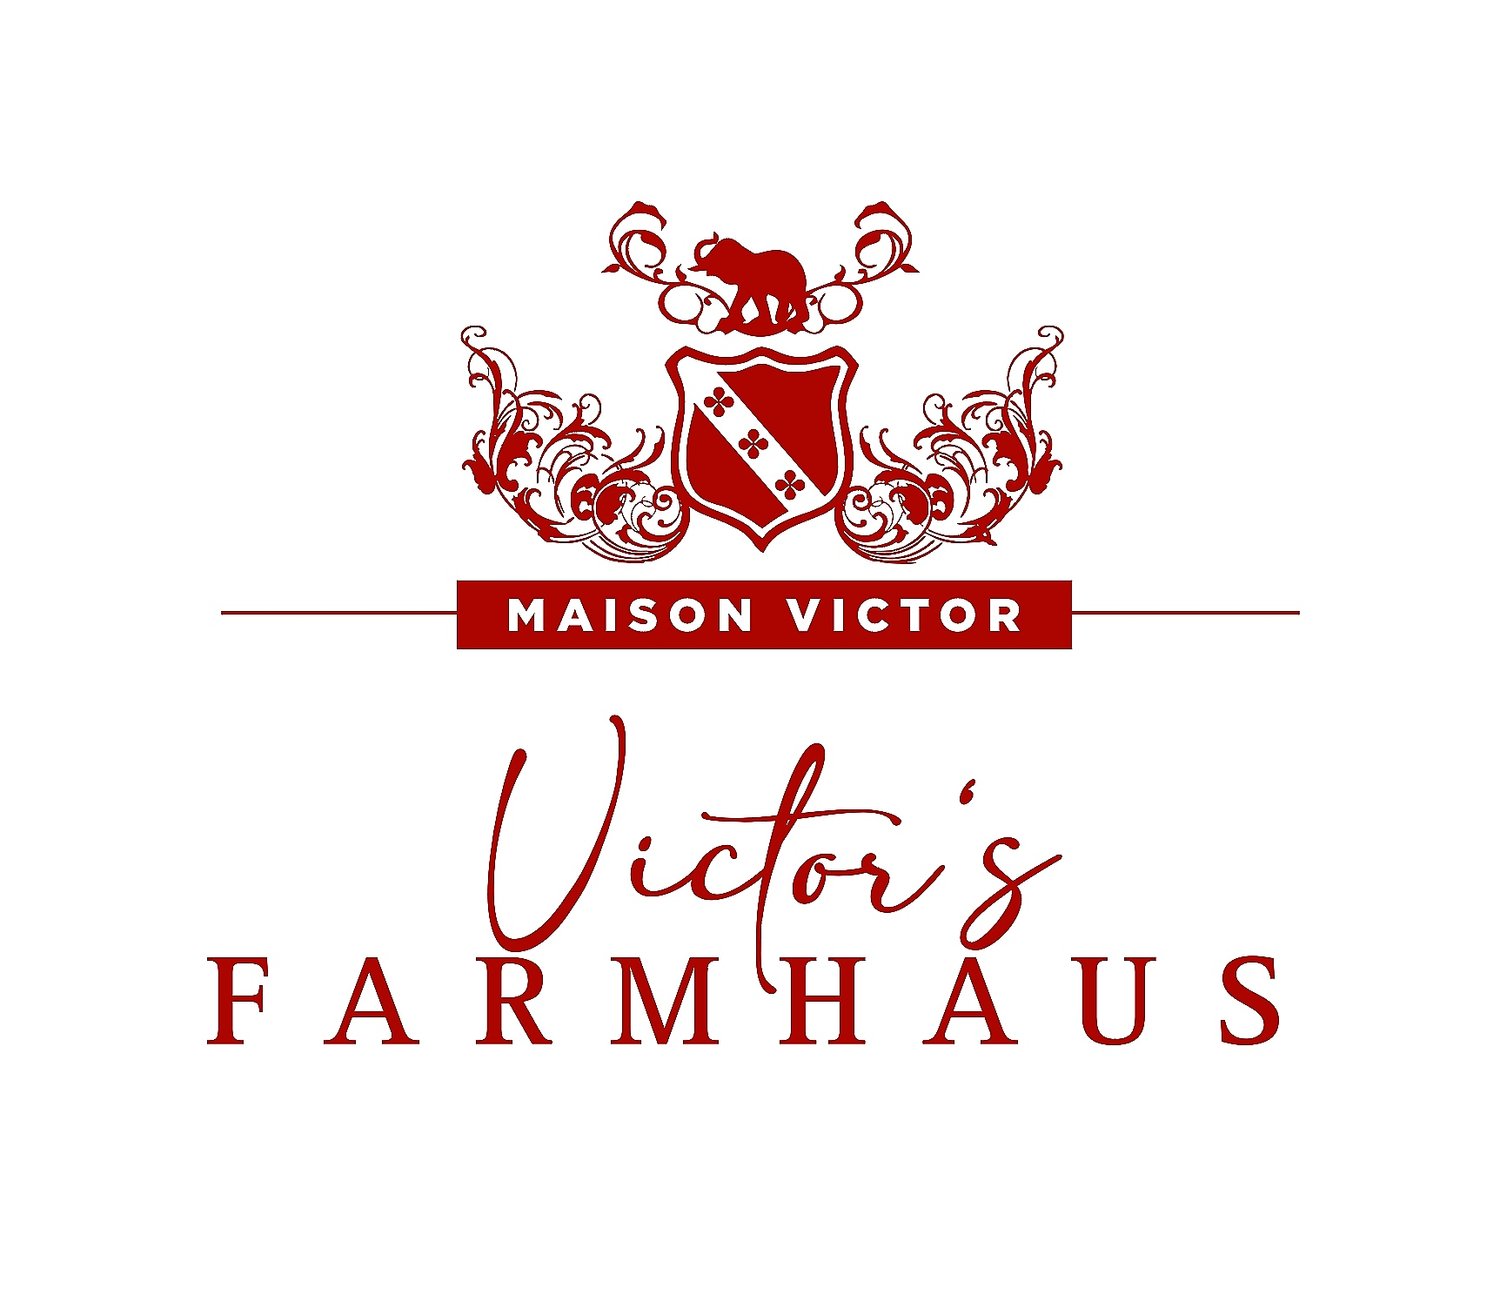 Maison Victor Farmhaus